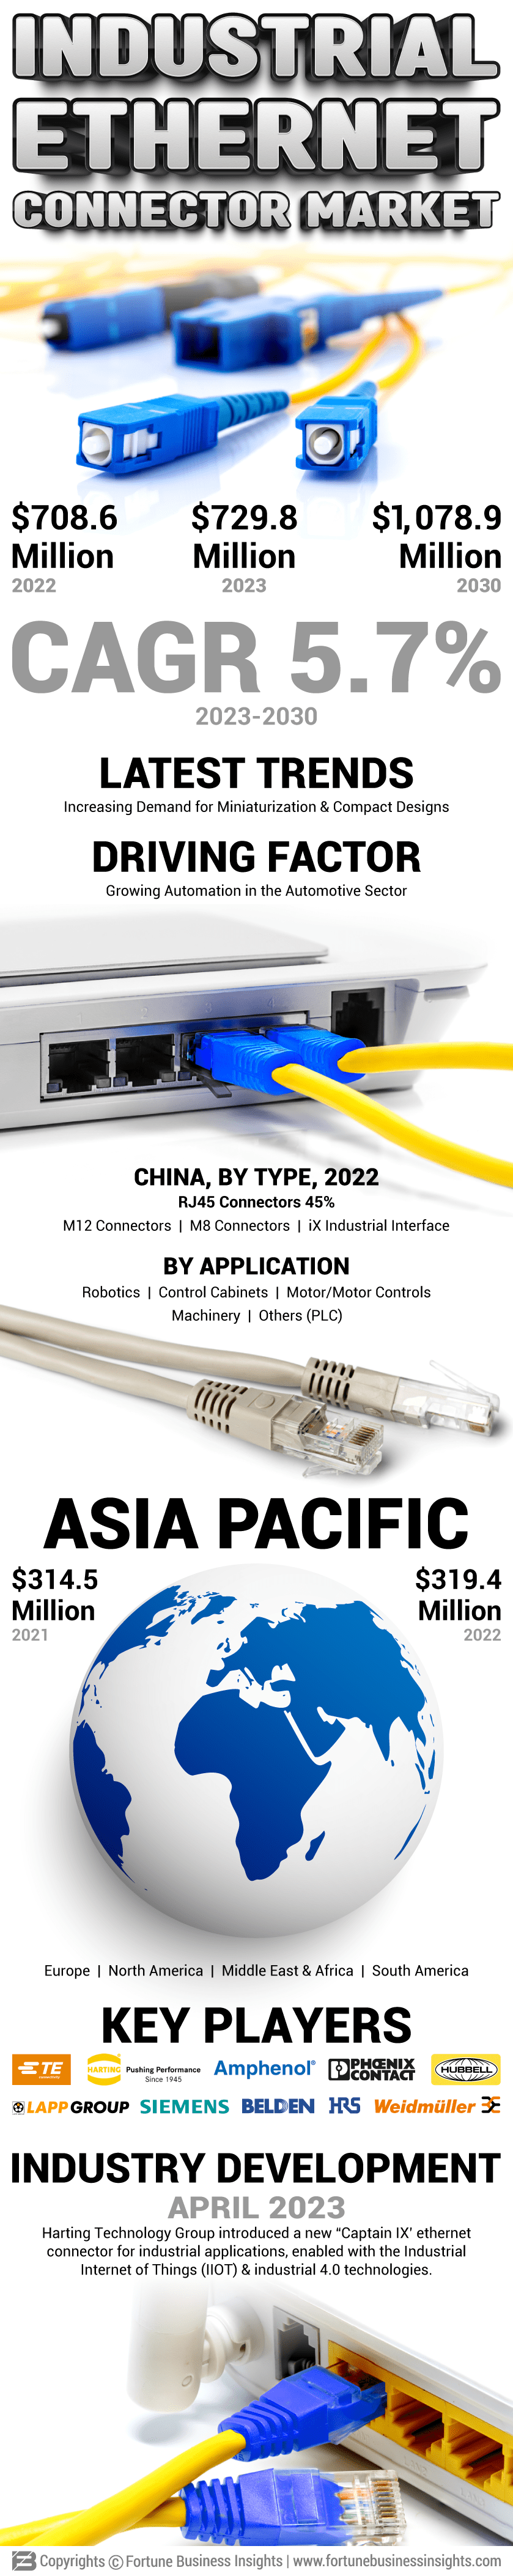 Industrial Ethernet Connector Market